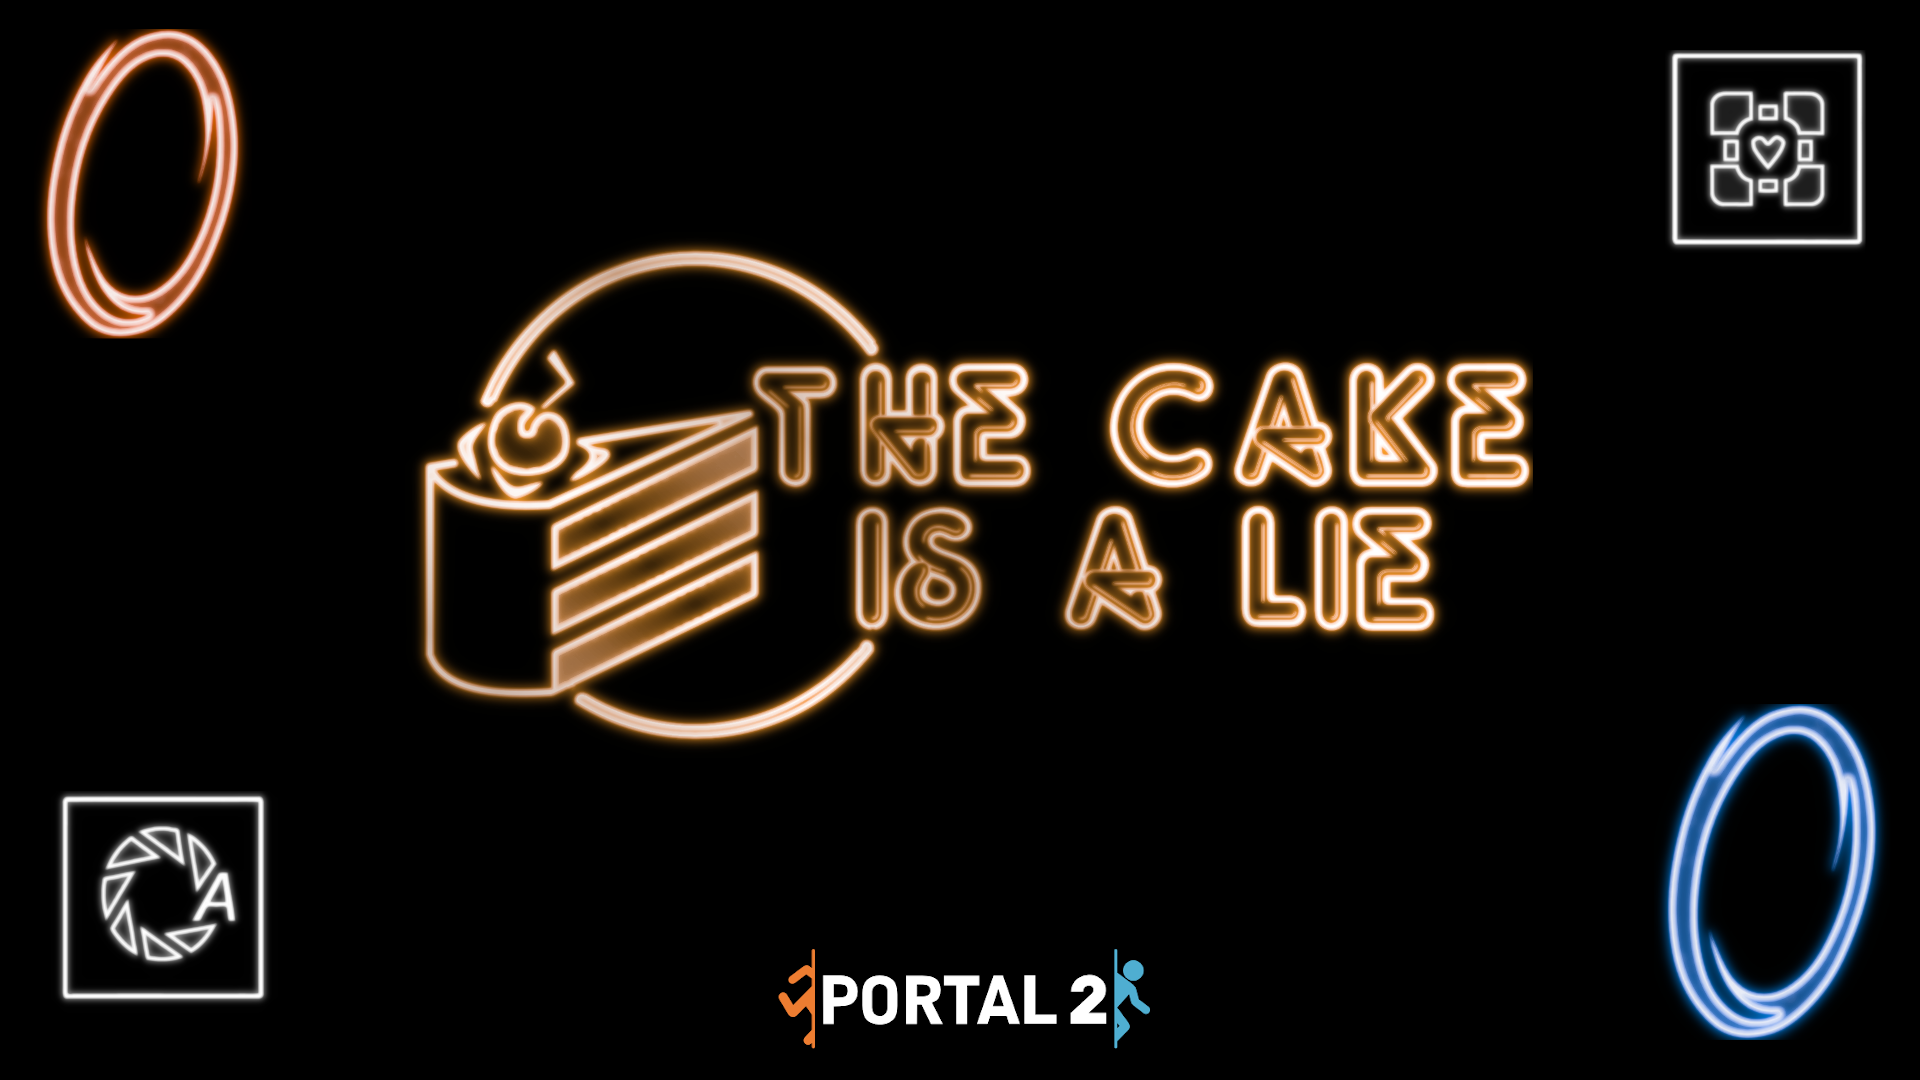 General 1920x1080 Portal (game) cake video games black background